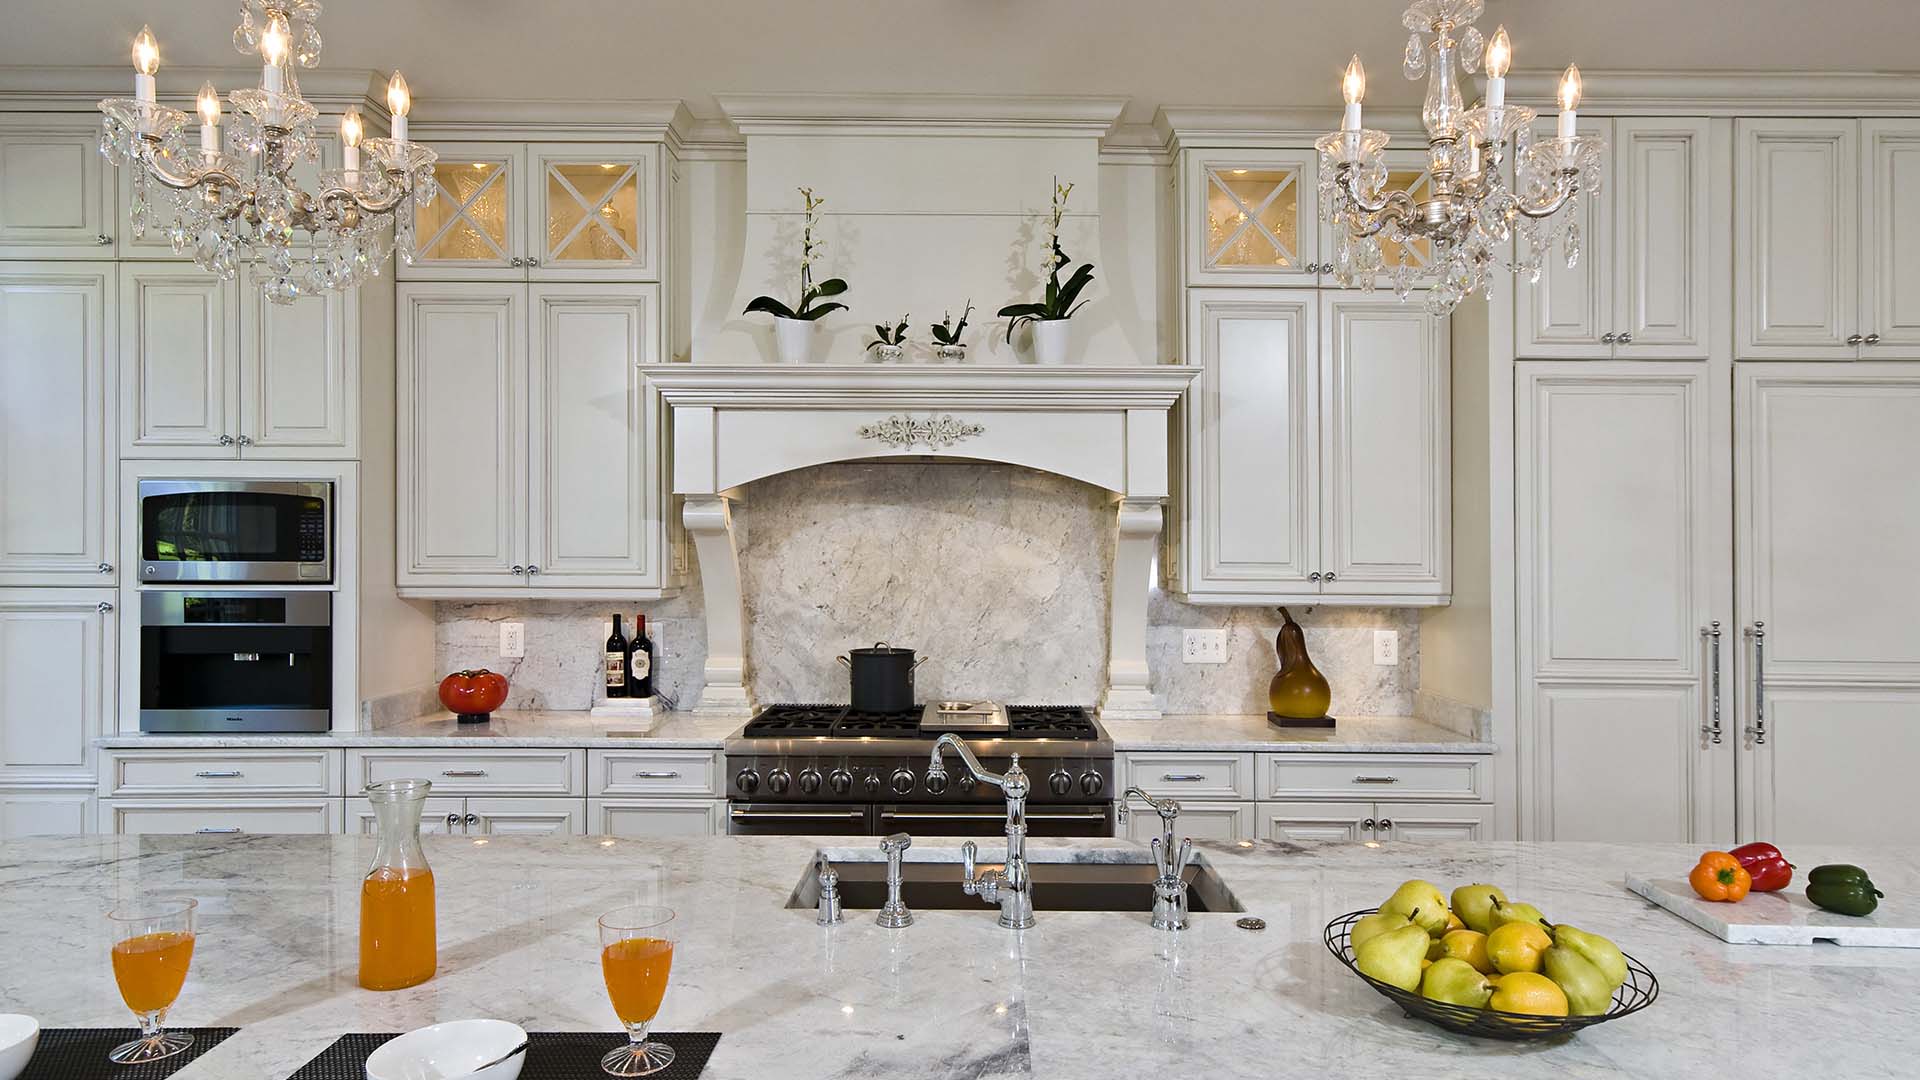 2013 Professional Remodeler, Silver Award Winner, Residential Kitchen $50,000 to $100,000